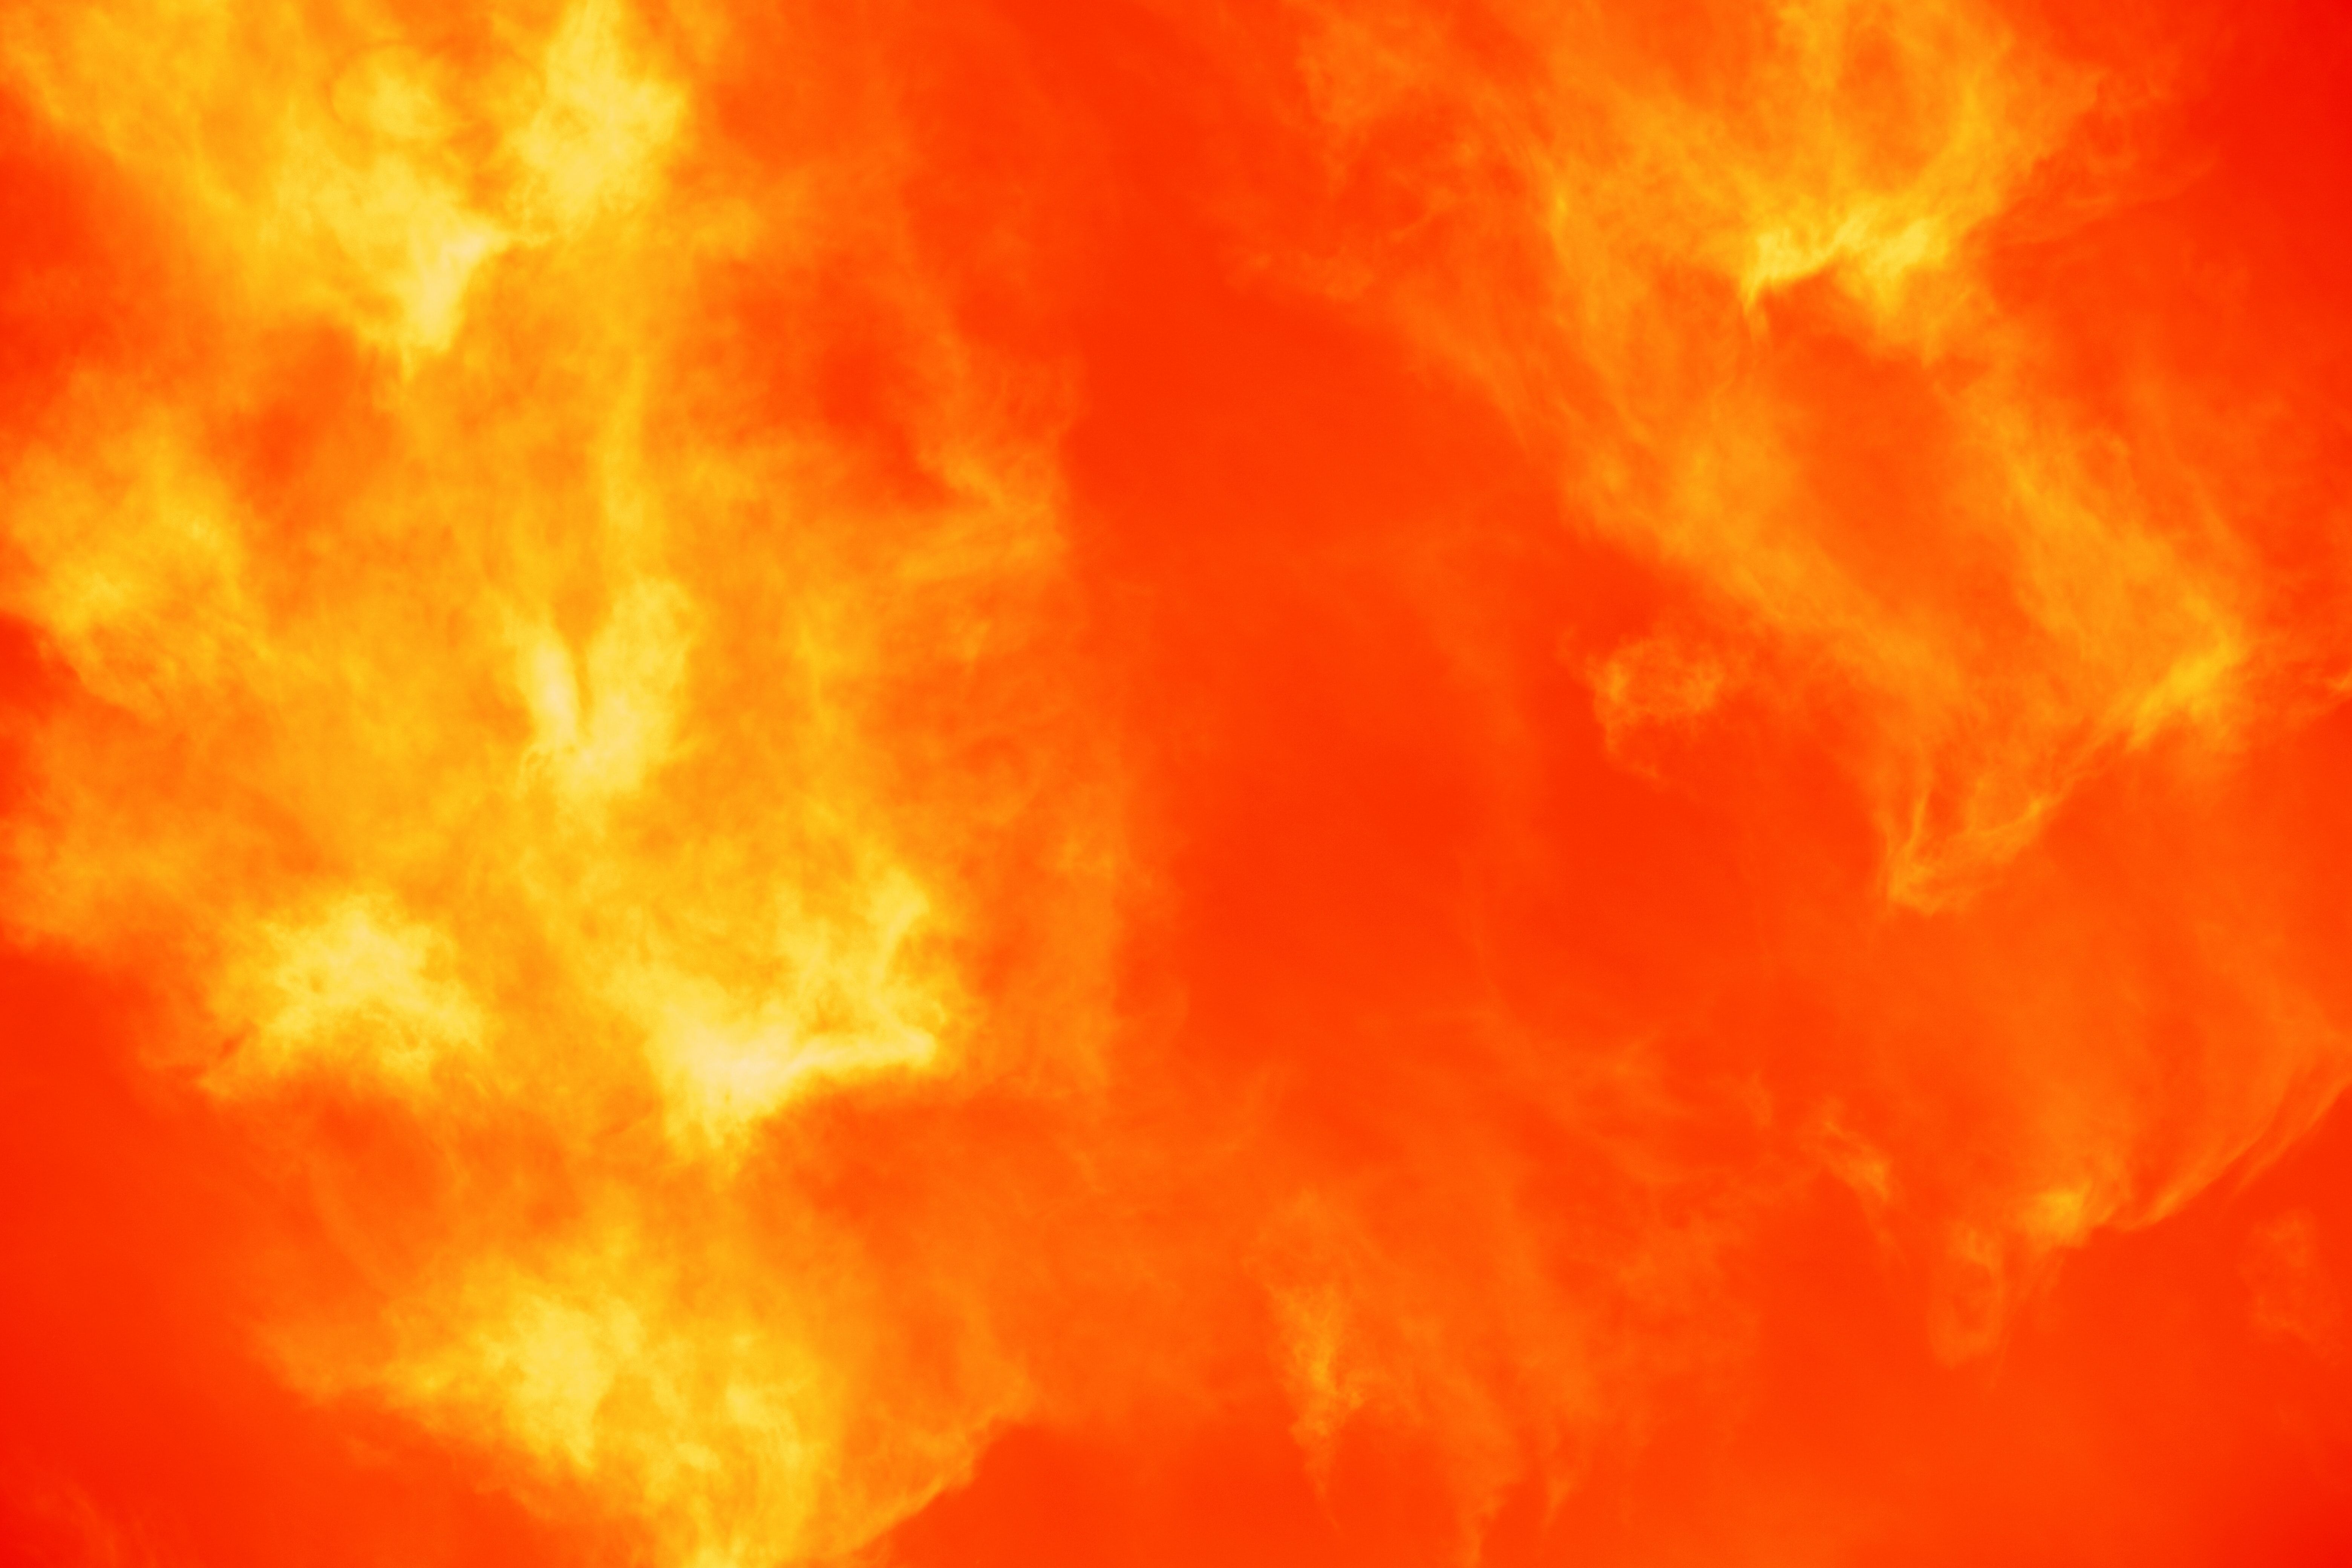 Download wallpaper 6240x4160 orange, gradient, smoke HD background